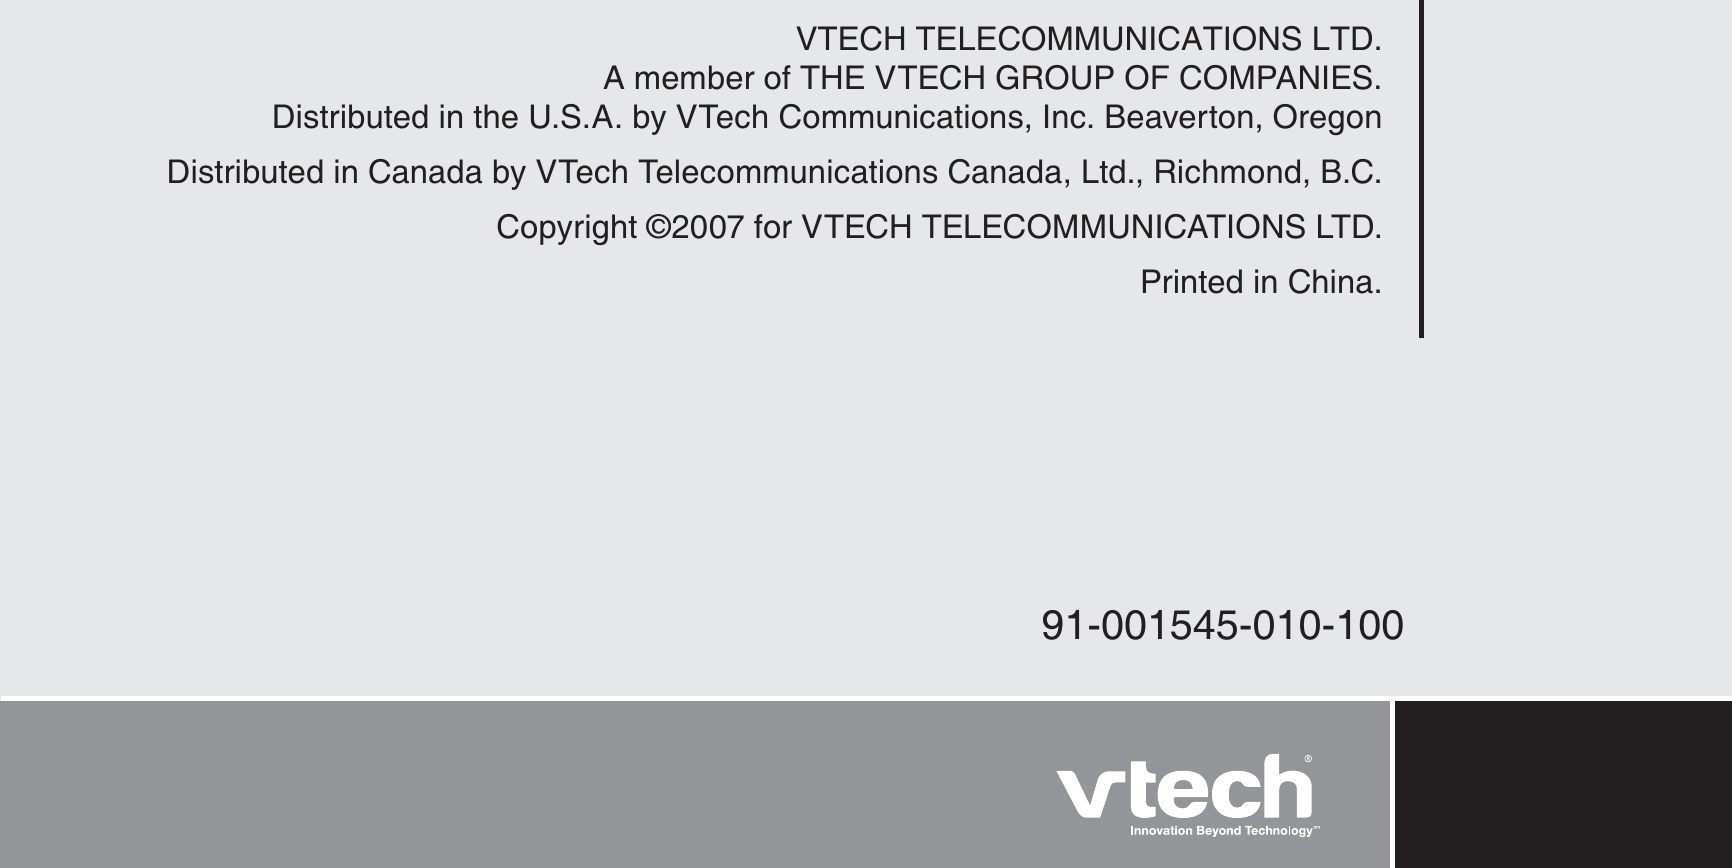 VTECH TELECOMMUNICATIONS LTD.A member of THE VTECH GROUP OF COMPANIES.Distributed in the U.S.A. by VTech Communications, Inc. Beaverton, OregonDistributed in Canada by VTech Telecommunications Canada, Ltd., Richmond, B.C.Copyright ©2007 for VTECH TELECOMMUNICATIONS LTD.Printed in China.91-001545-010-100